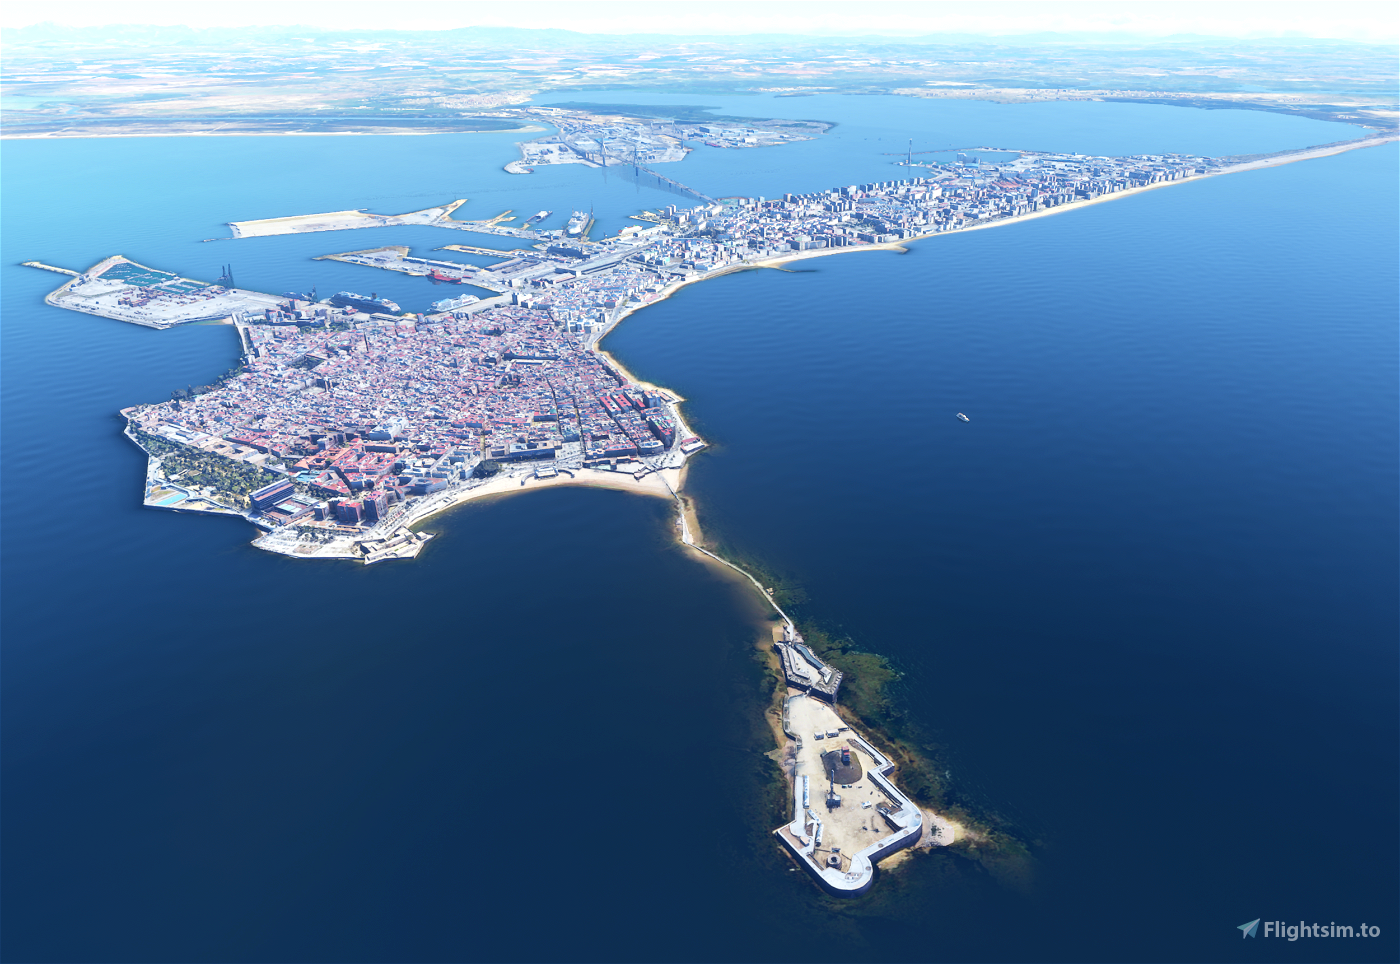 Updated - Cadiz Landmarks - Full City in Photogrammetry Microsoft Flight Simulator